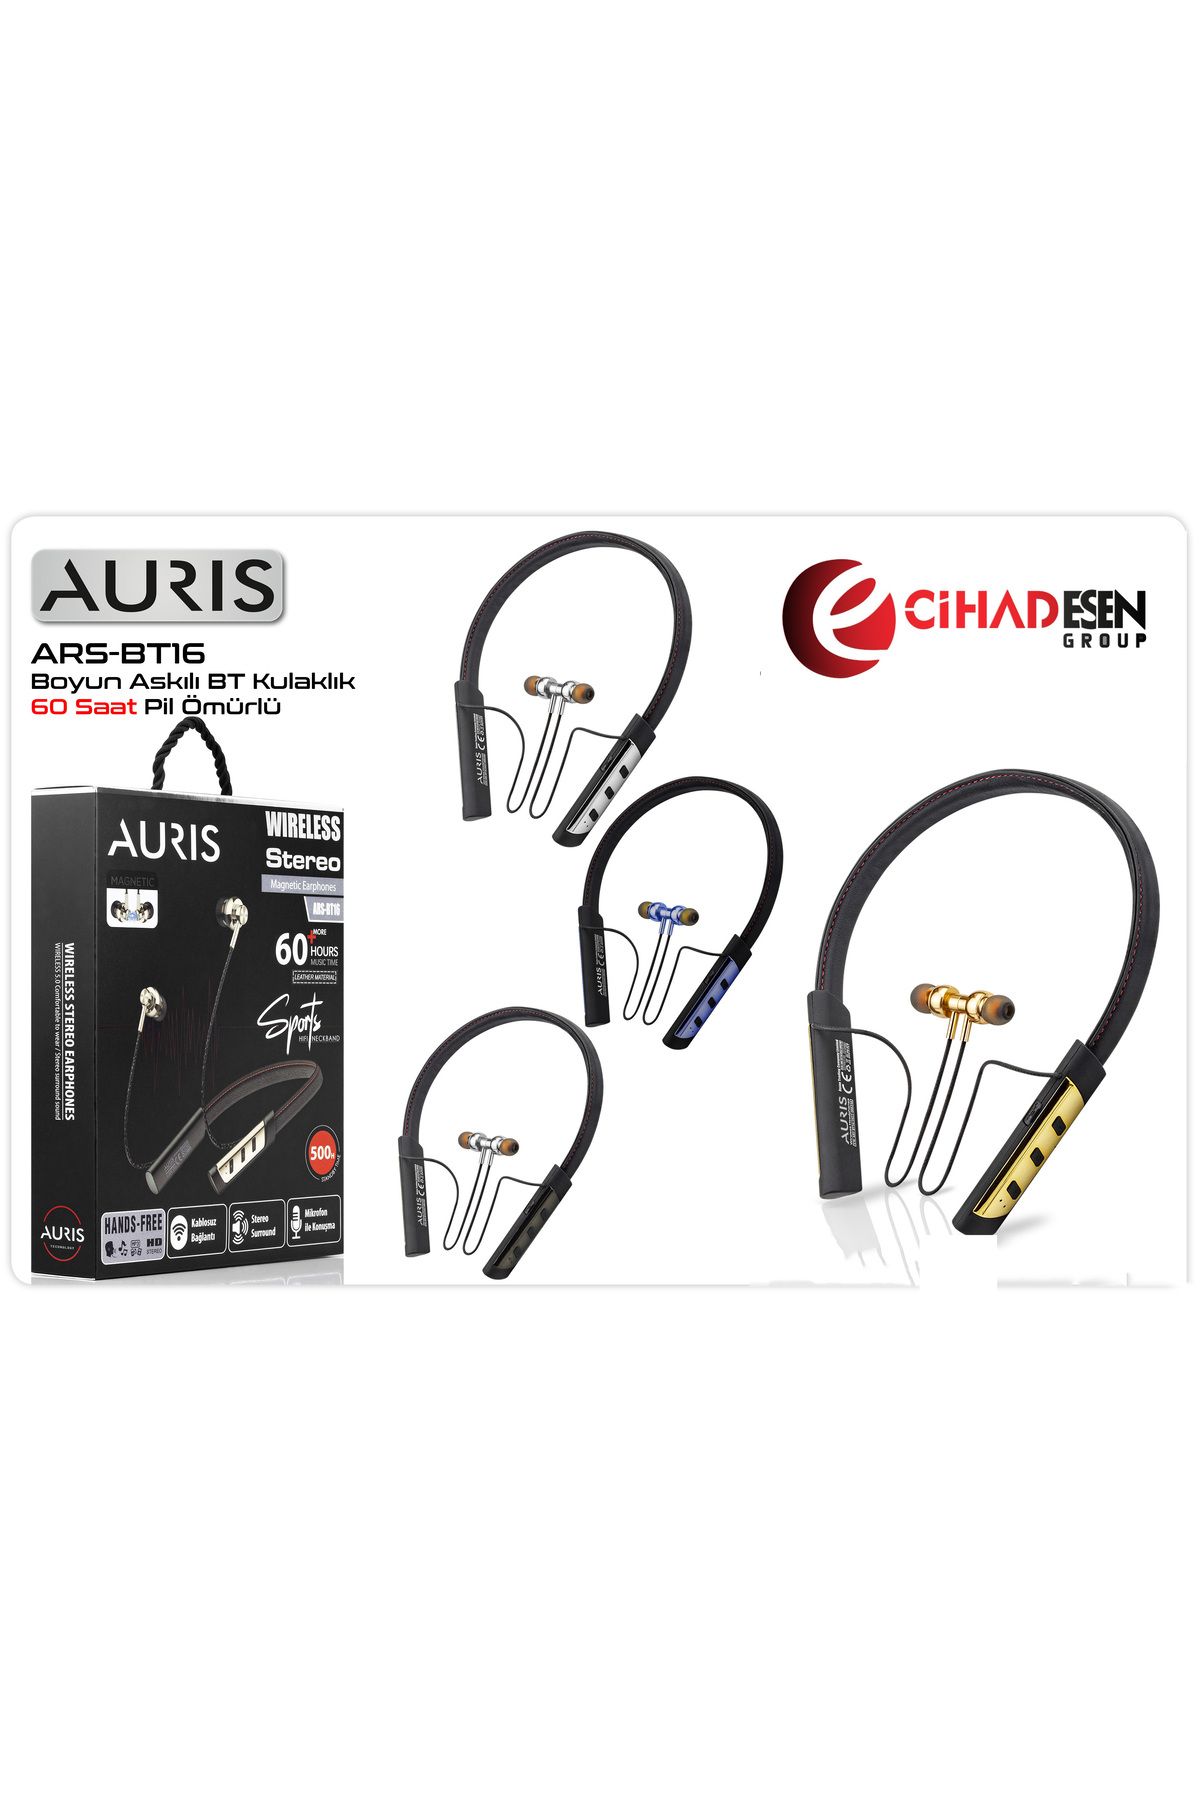 Auris ARS-BT16 Boyun Askılı Bluetooth Kablosuz Kulaklık 60 Saat Pil Ömürlü